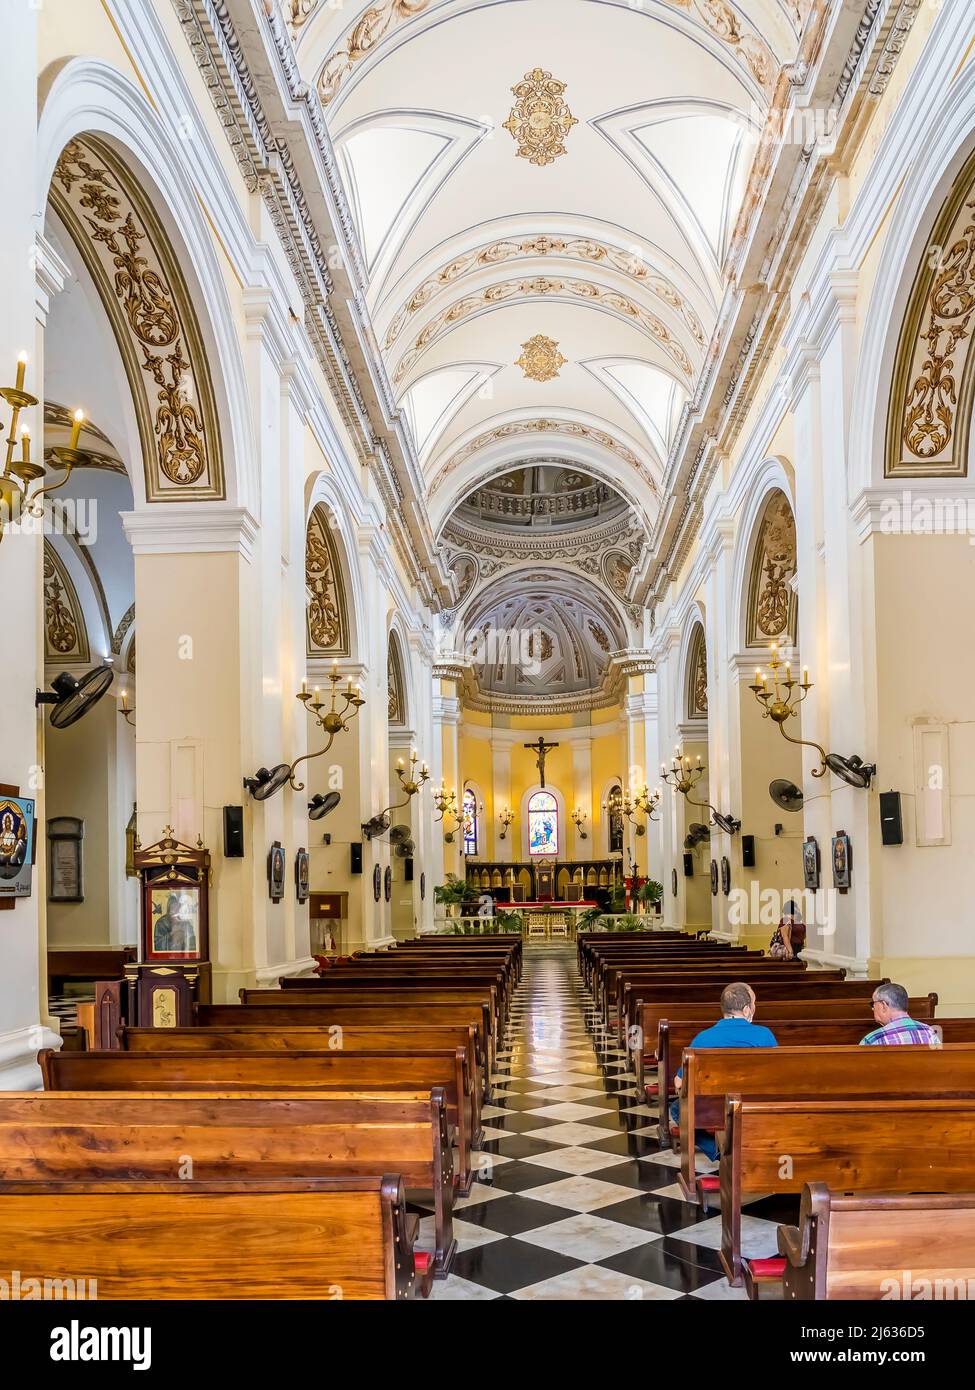 Interior of the Catedral de San Juan Bautista, or Cathedral of Saint John the Baptist in Old San Juan Puerto Rico Stock Photo